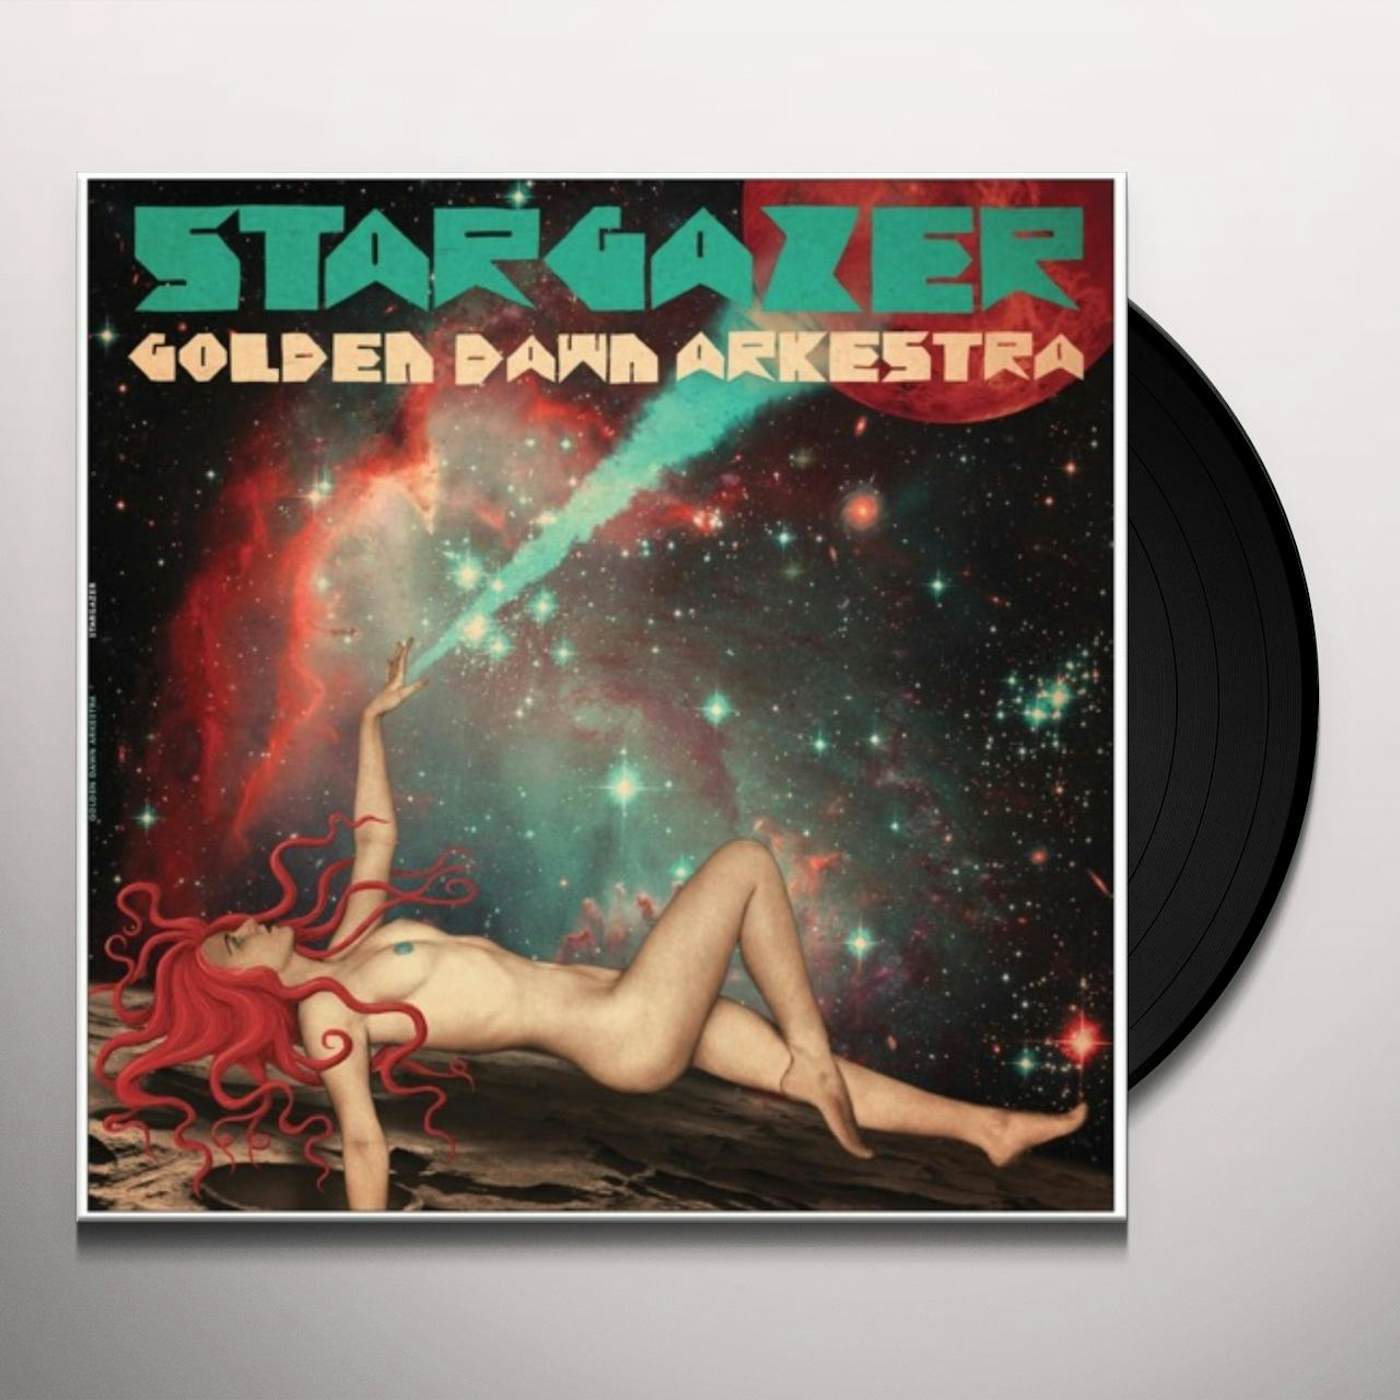 Golden Dawn Arkestra Stargazer Vinyl Record